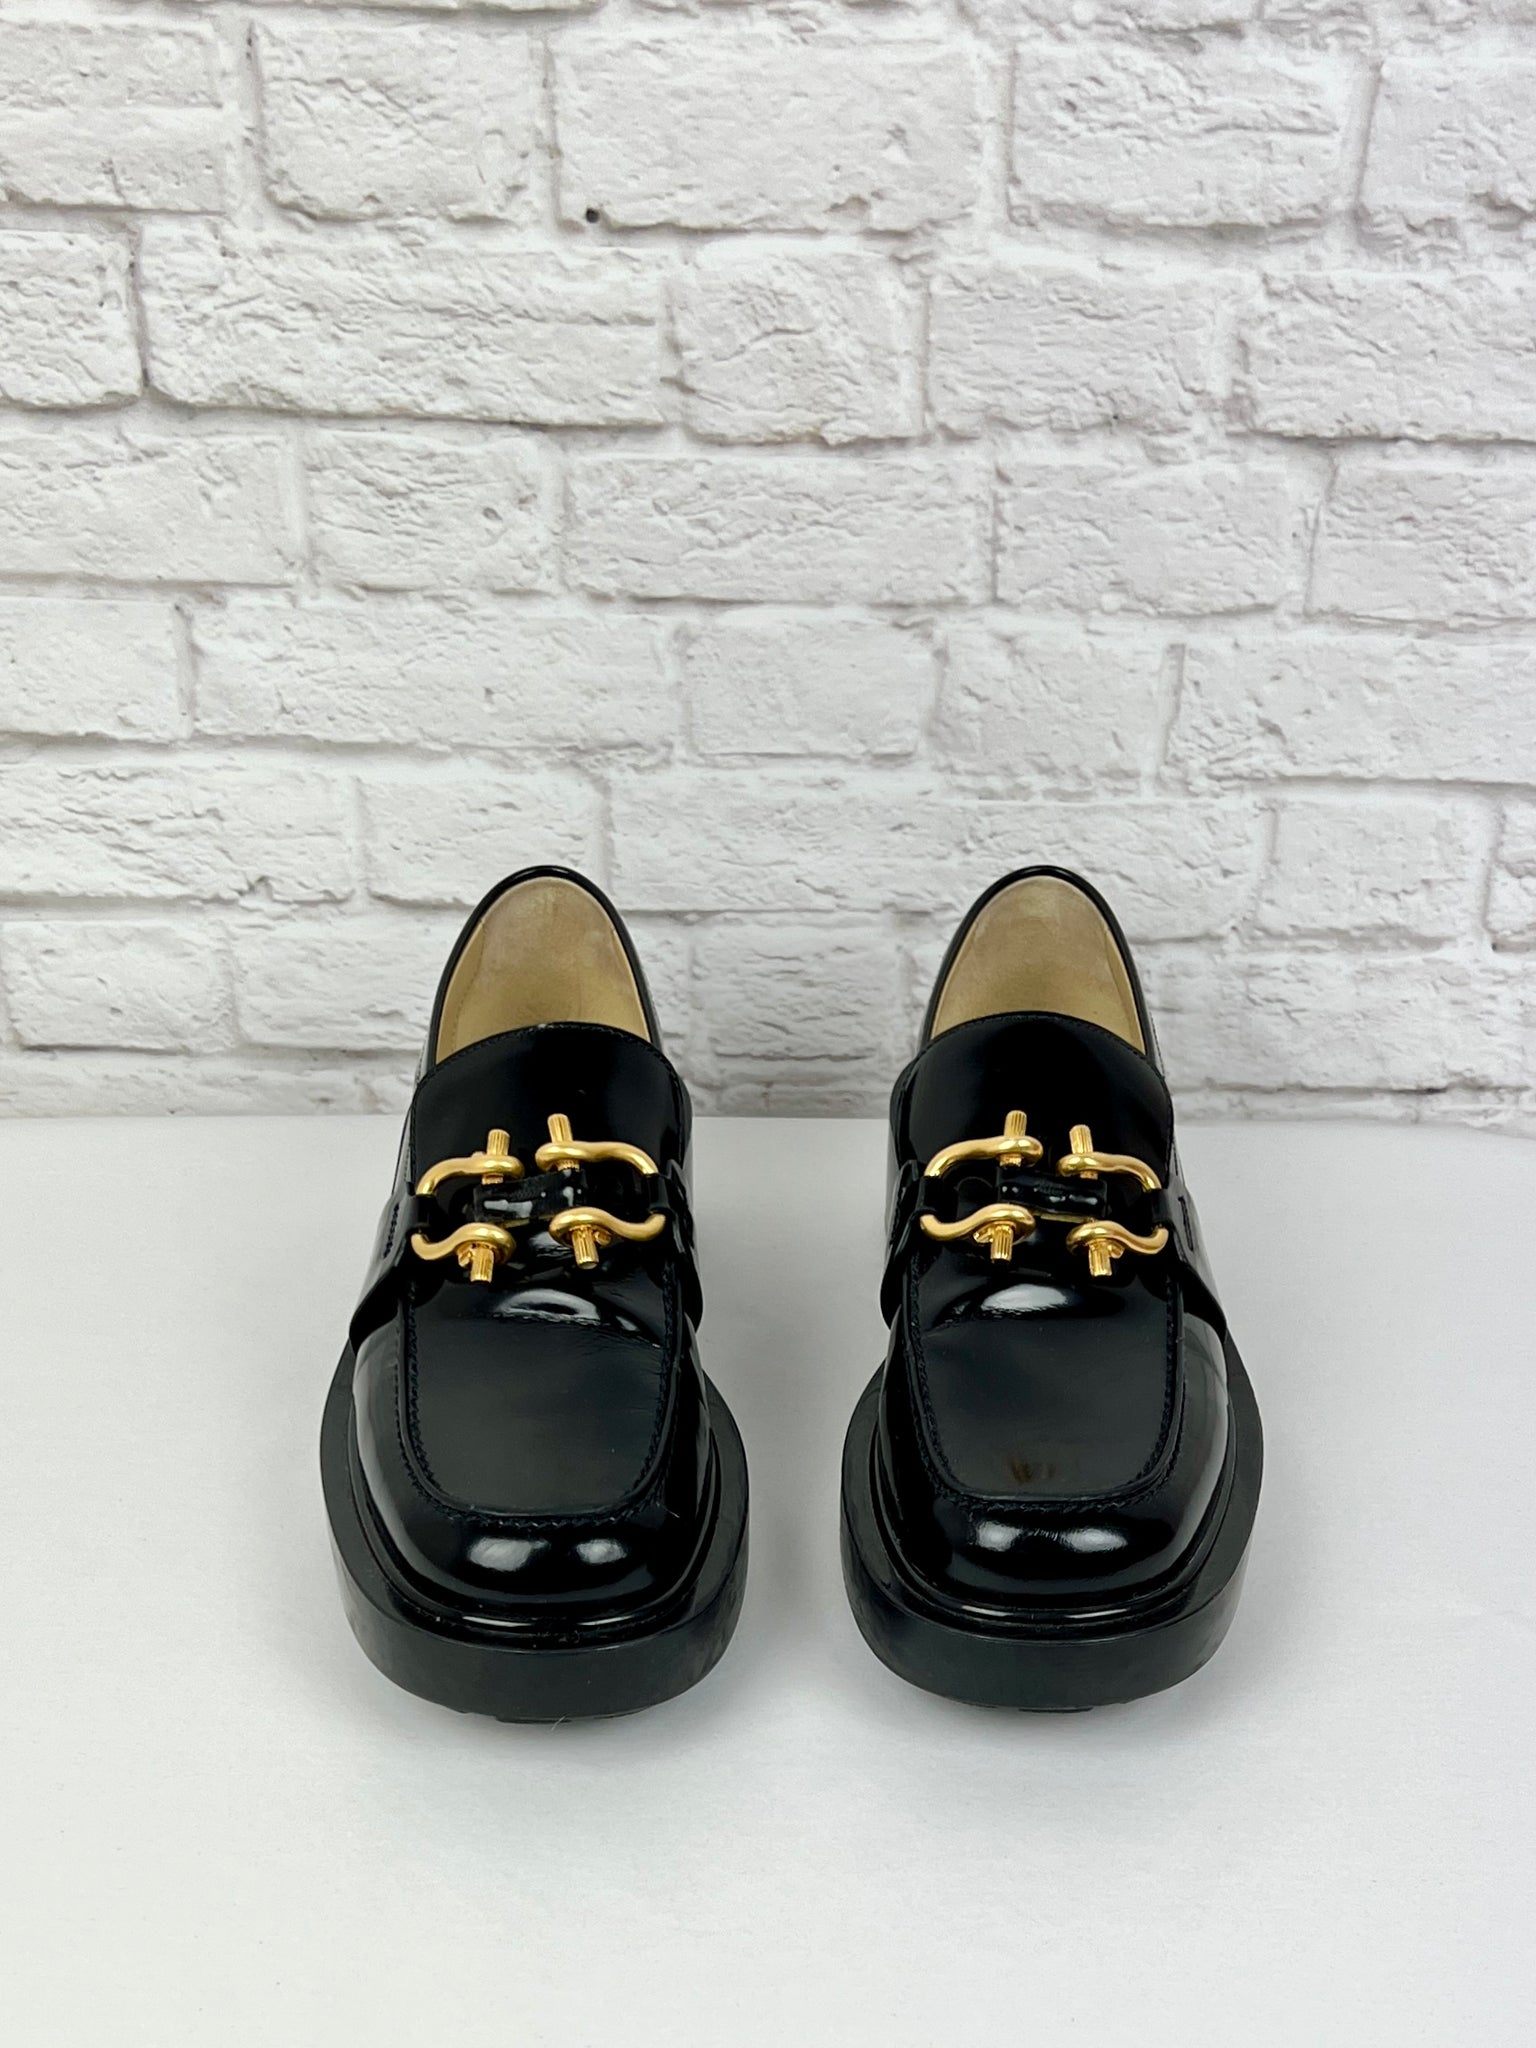 BOTTEGA VENETA Monsieur Embellished Patent-leather Loafers, Size 40, Black